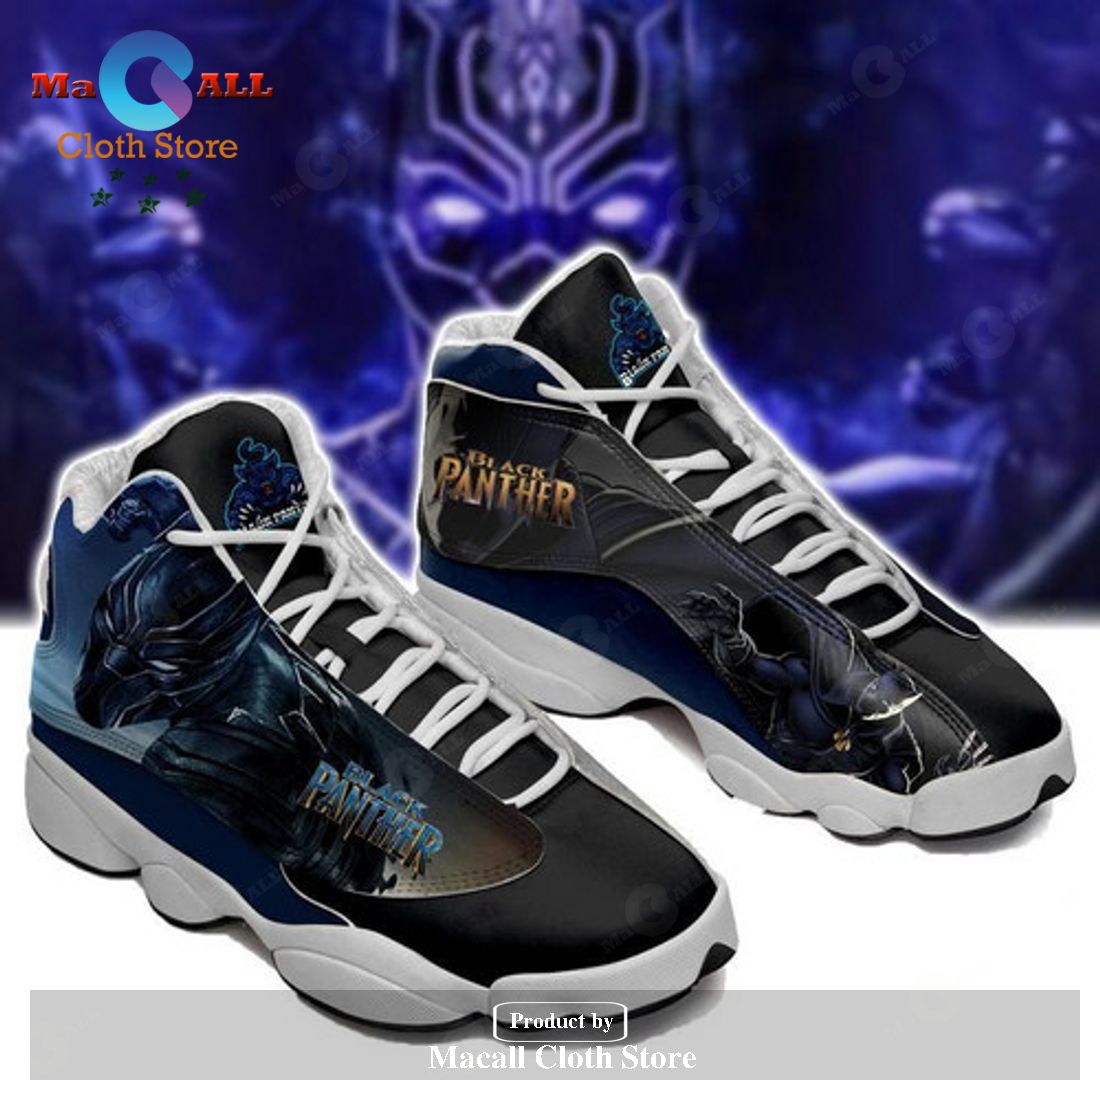 kleding Rekwisieten Verloren hart Black Panther Shoes form AIR Jordan 13 Sneakers Gift Shoes For Fan POD  Design - Macall Cloth Store - Destination for fashionistas